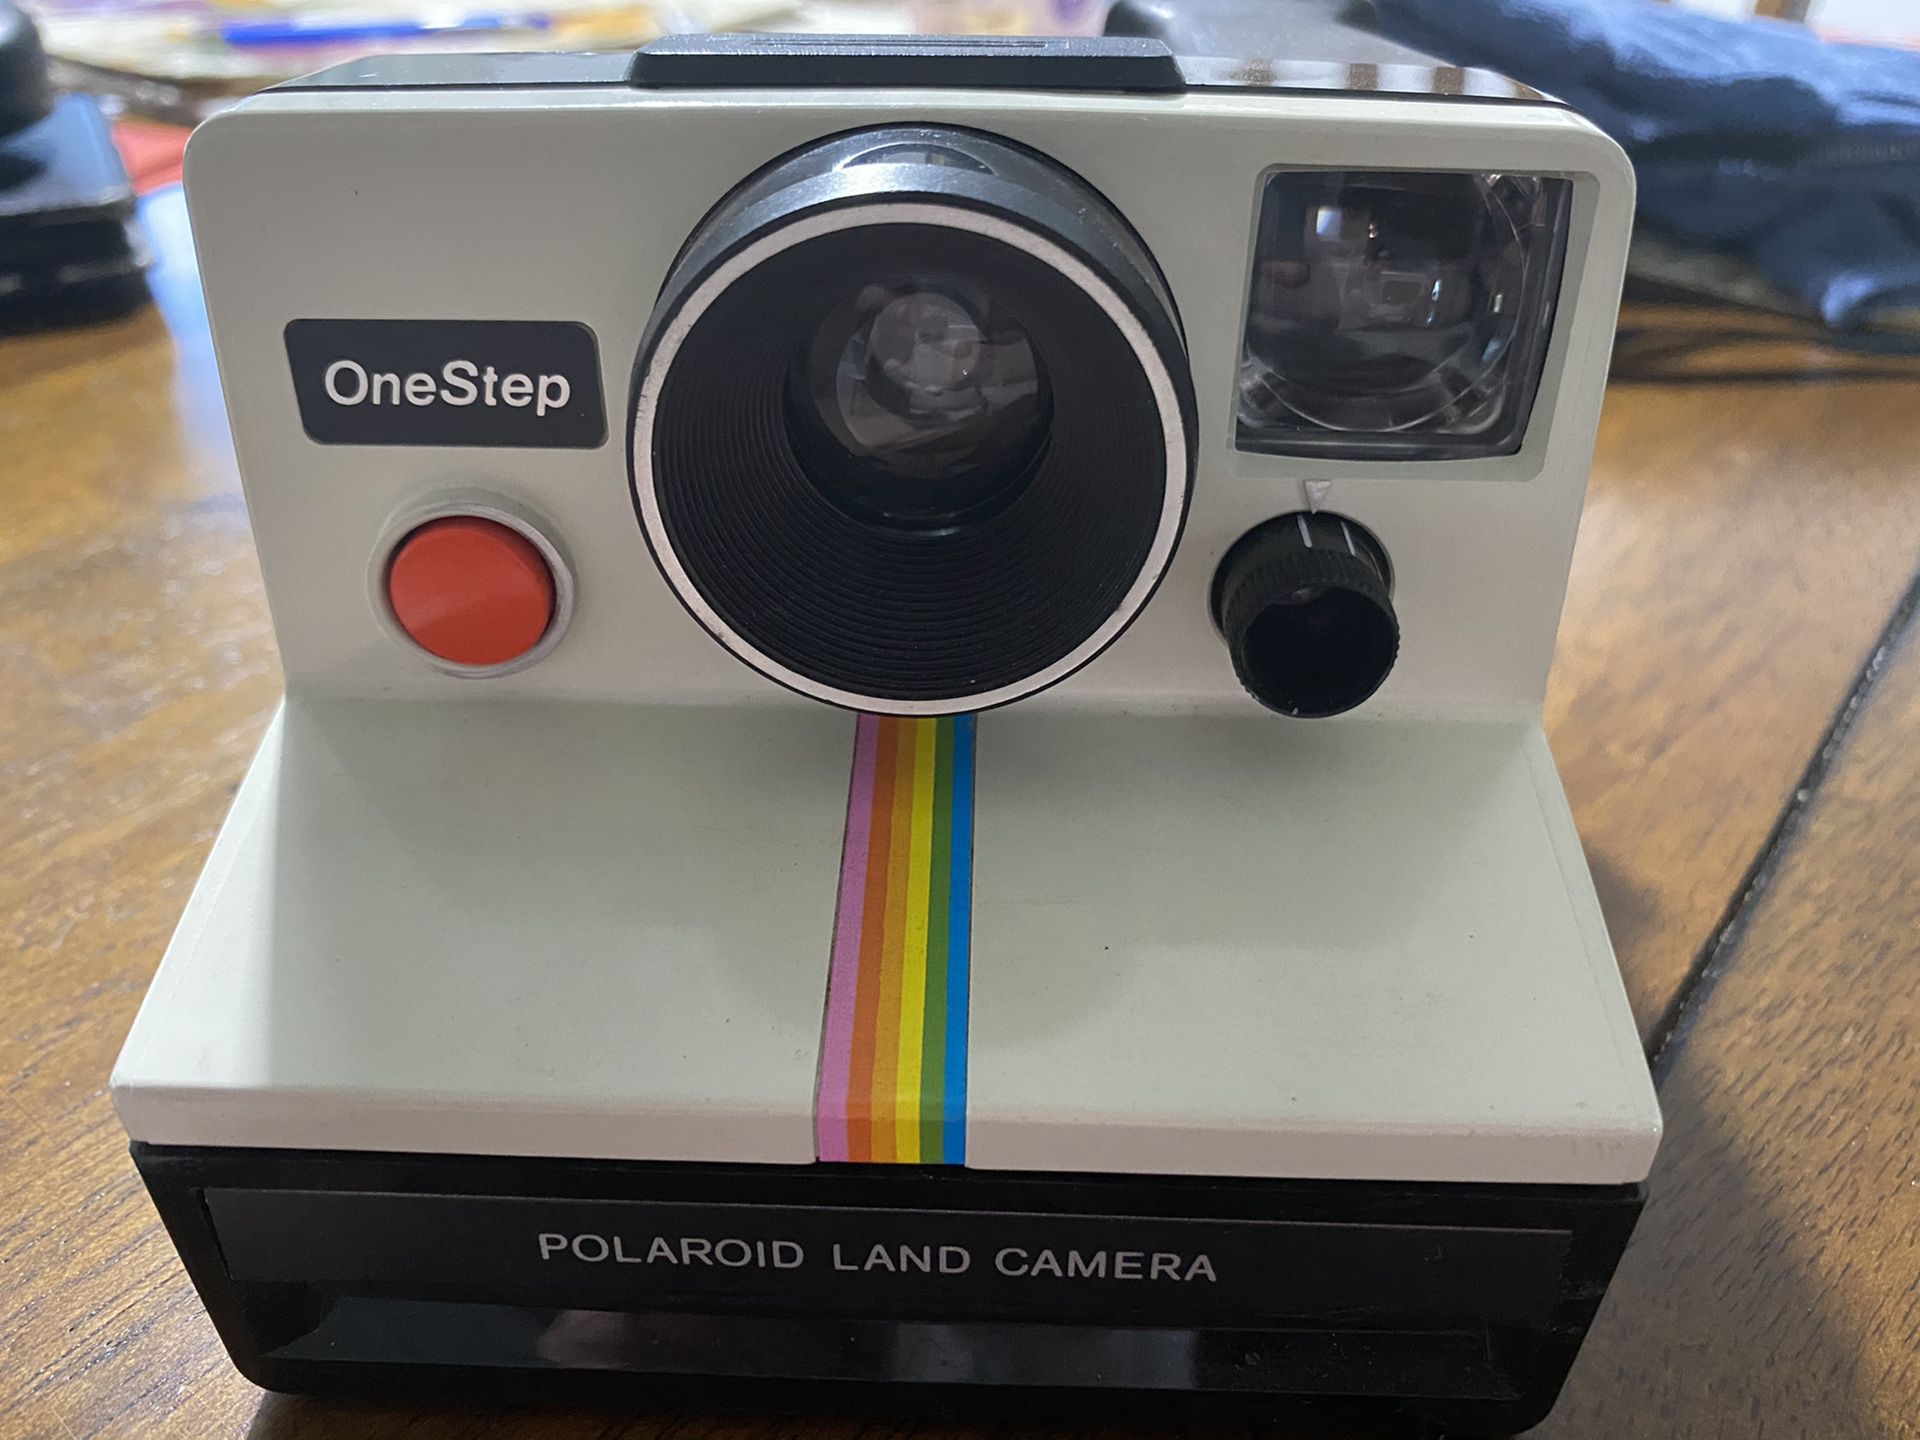 Polaroid Land Camera - One Step